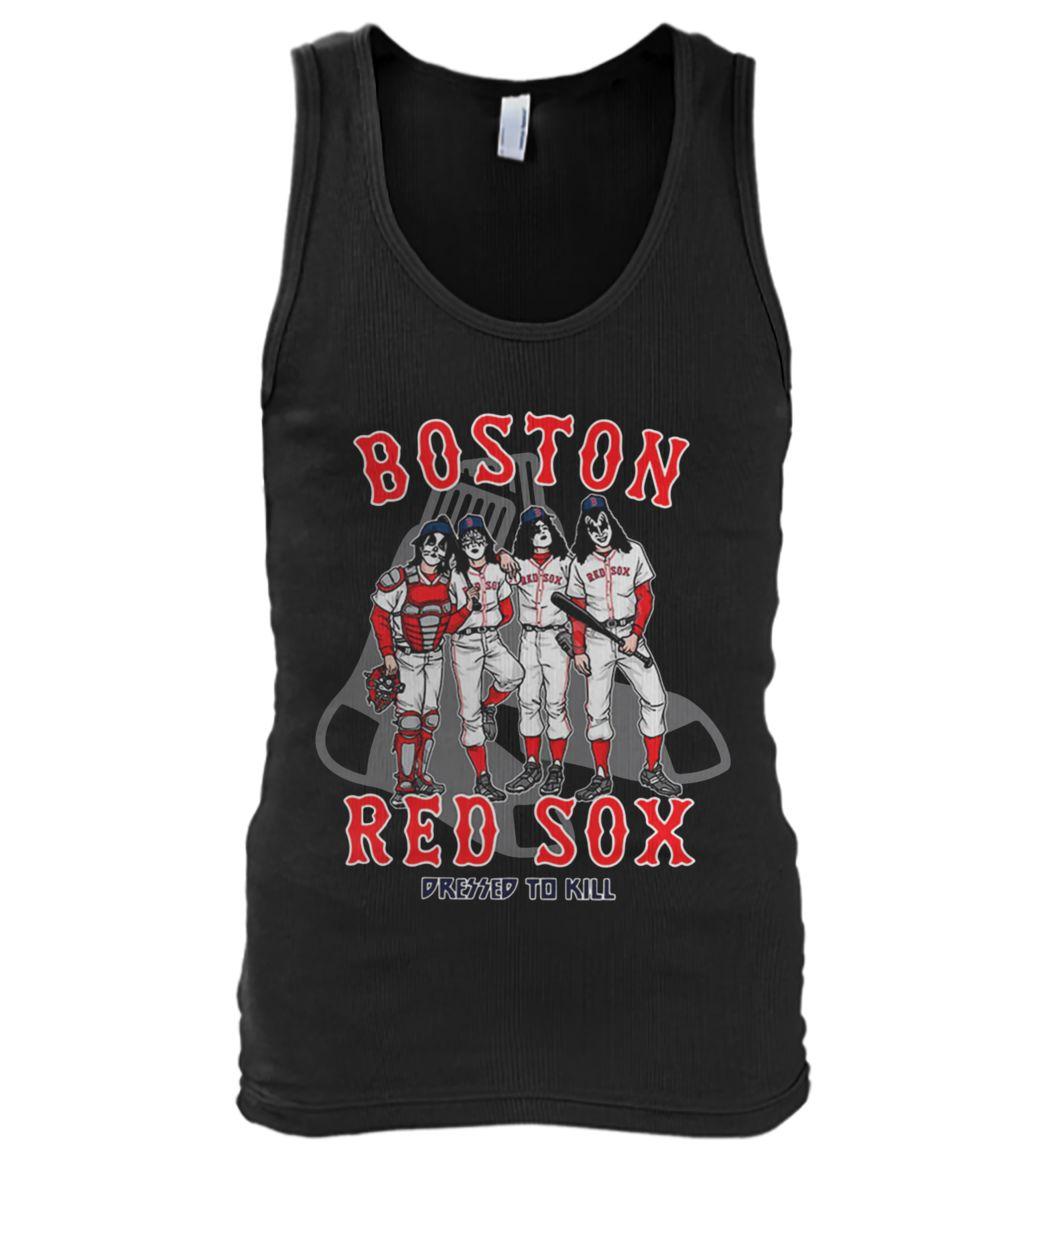 Boston red sox dressed to kill kiss rock band tank top